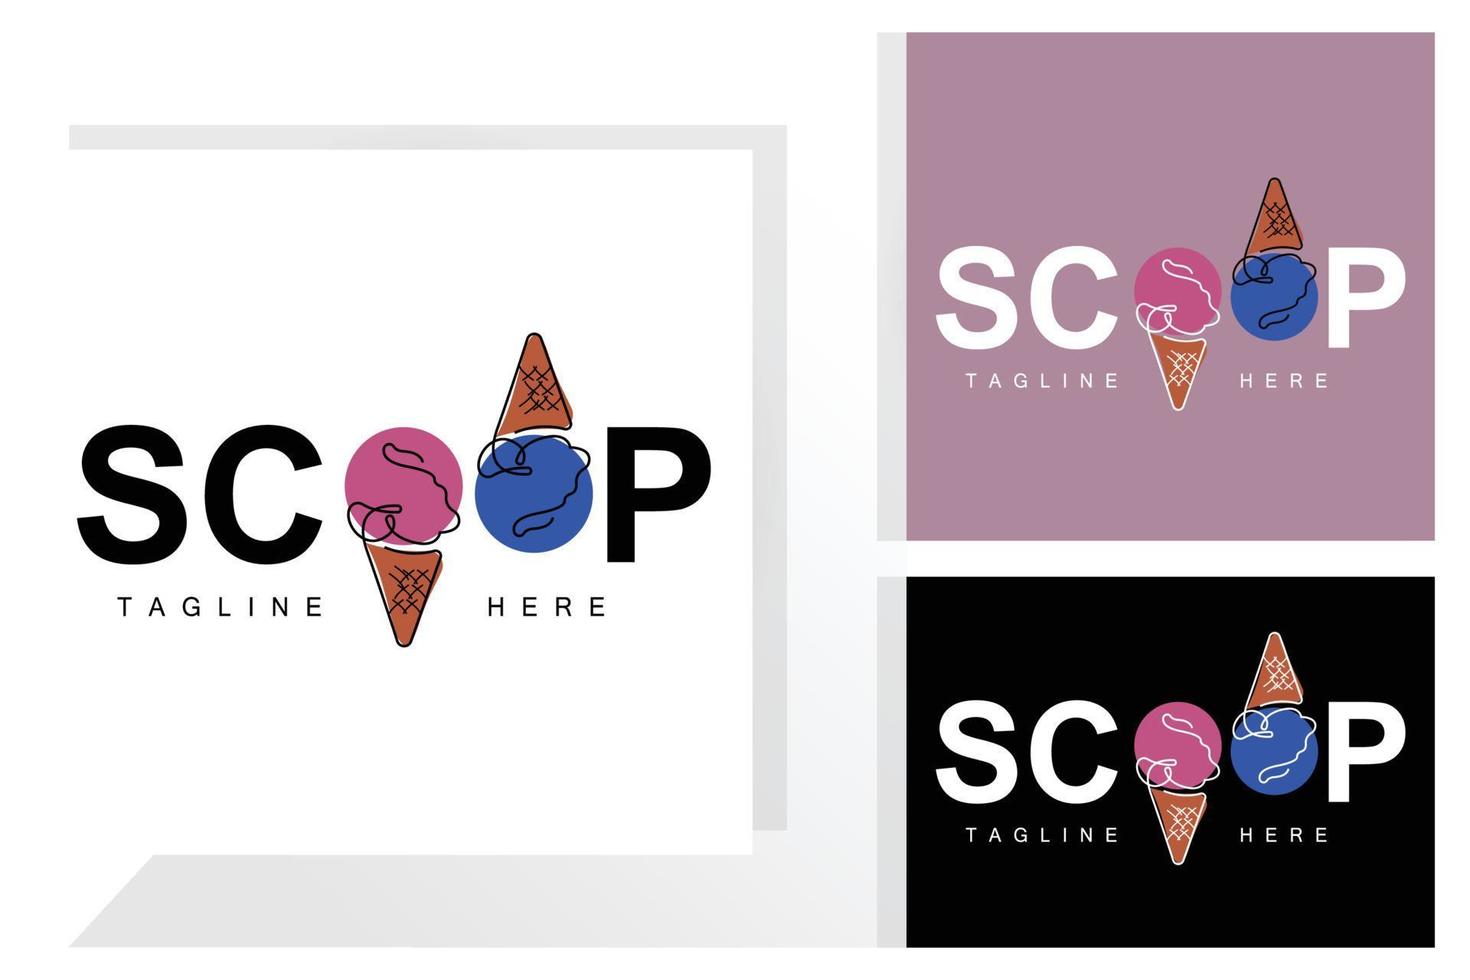 design de logotipo de sorvete gelato, comida doce e fria, produtos da empresa de marca vetorial vetor